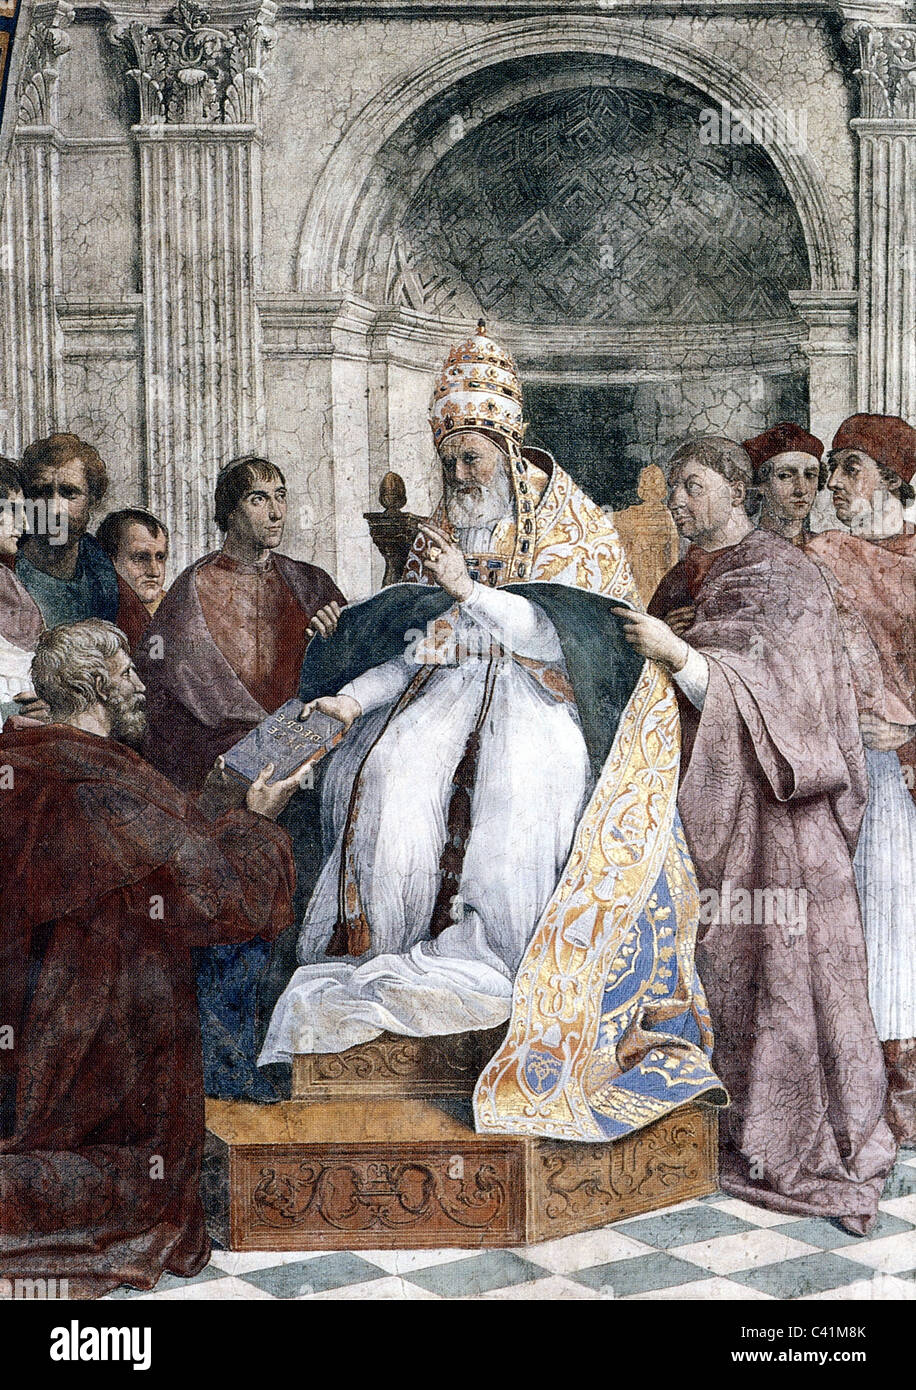 Gregory IX (Ugolino di Conti), vers 1170 - 22.8.1241, Pape 1227 - 1241, scène, reconnaissant les Decretels, fresque de Raphaël (1483 - 1520), Strophe della Segnatura, Banque D'Images